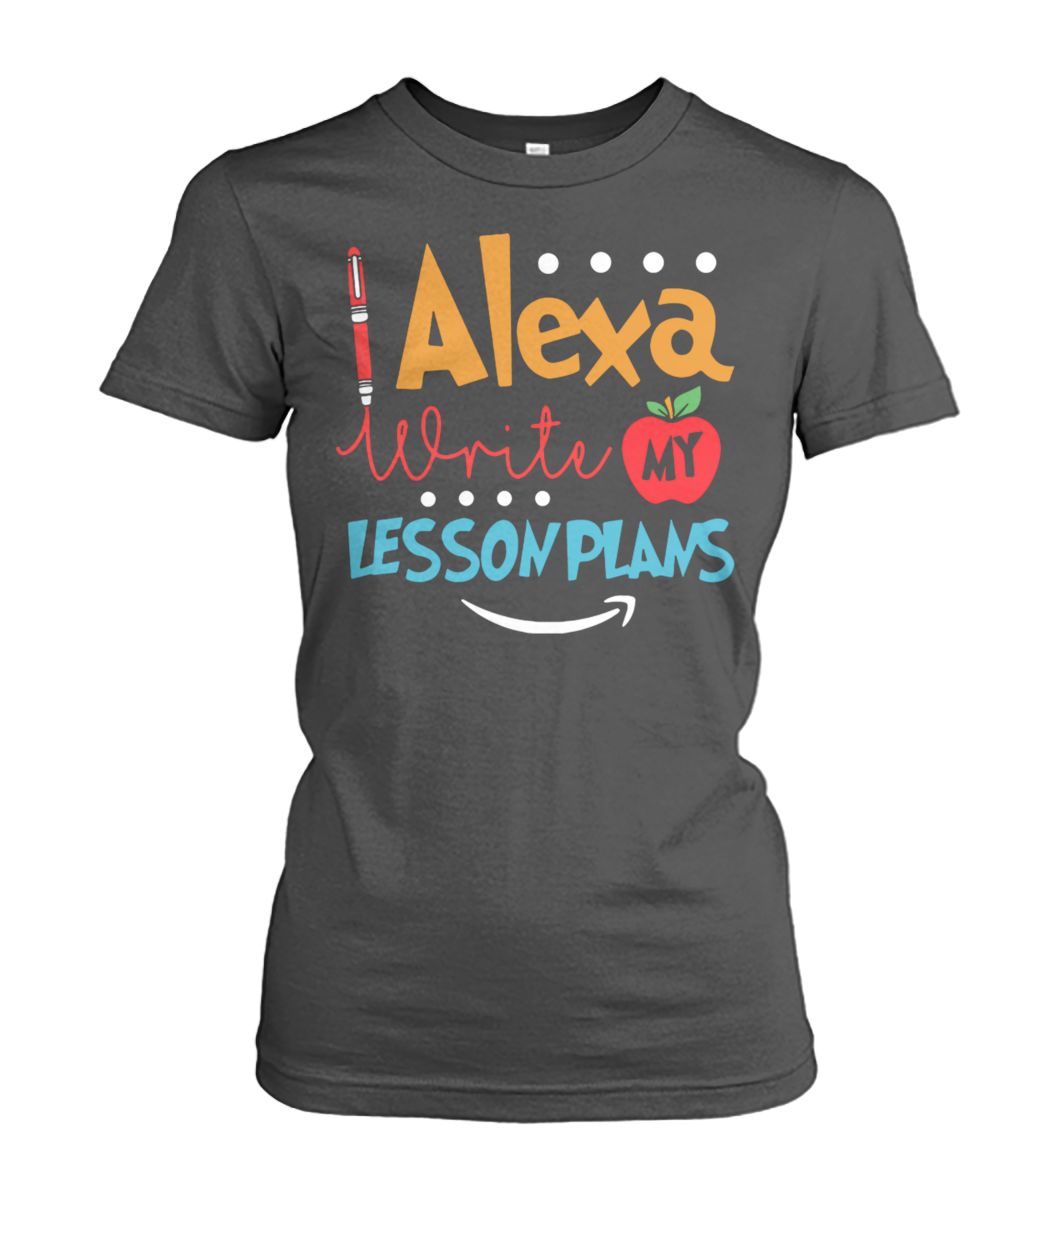 Alexa write my lesson plans women's crew tee